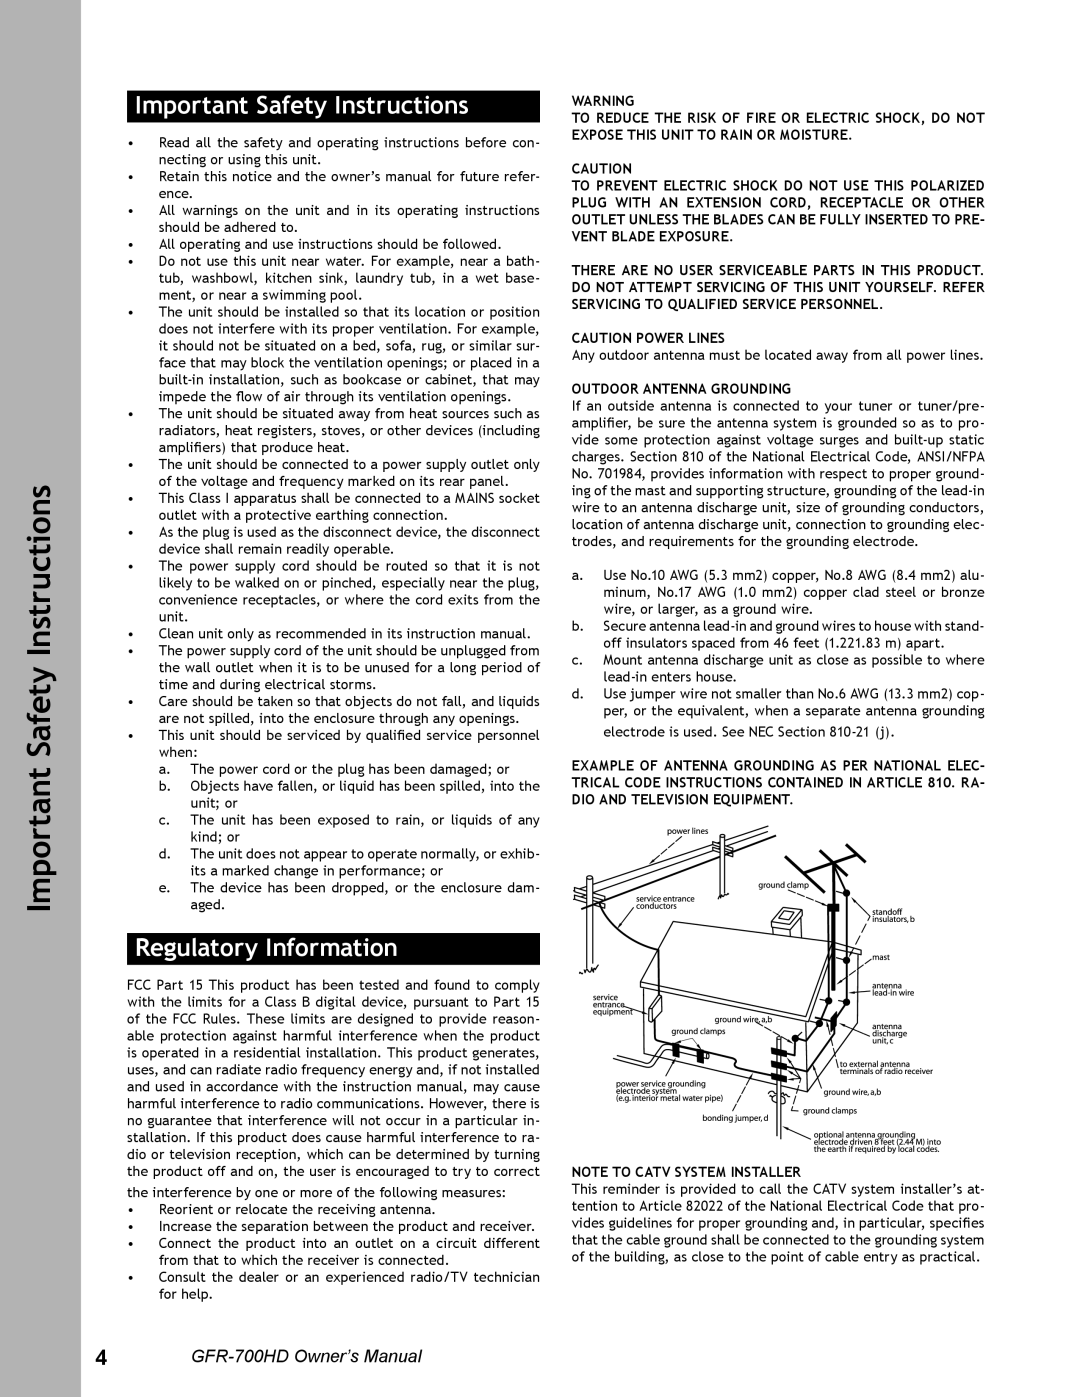 Adcom GFR-700HD user manual Important Safety Instructions, Regulatory Information 